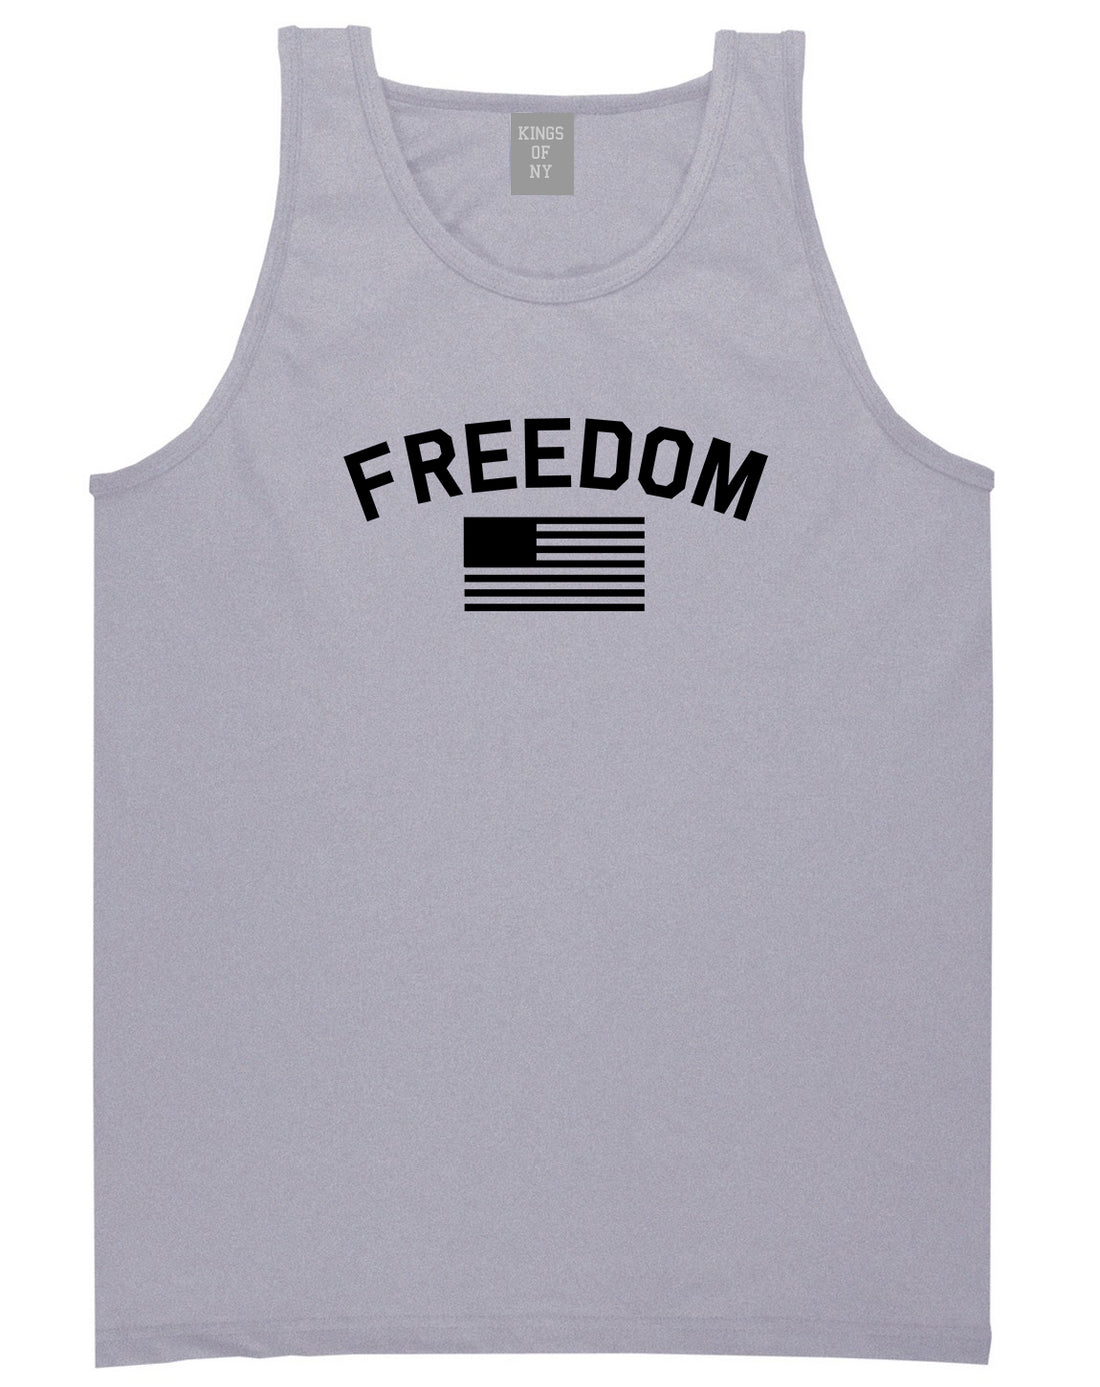 Freedom Flag Mens Grey Tank Top Shirt by KINGS OF NY